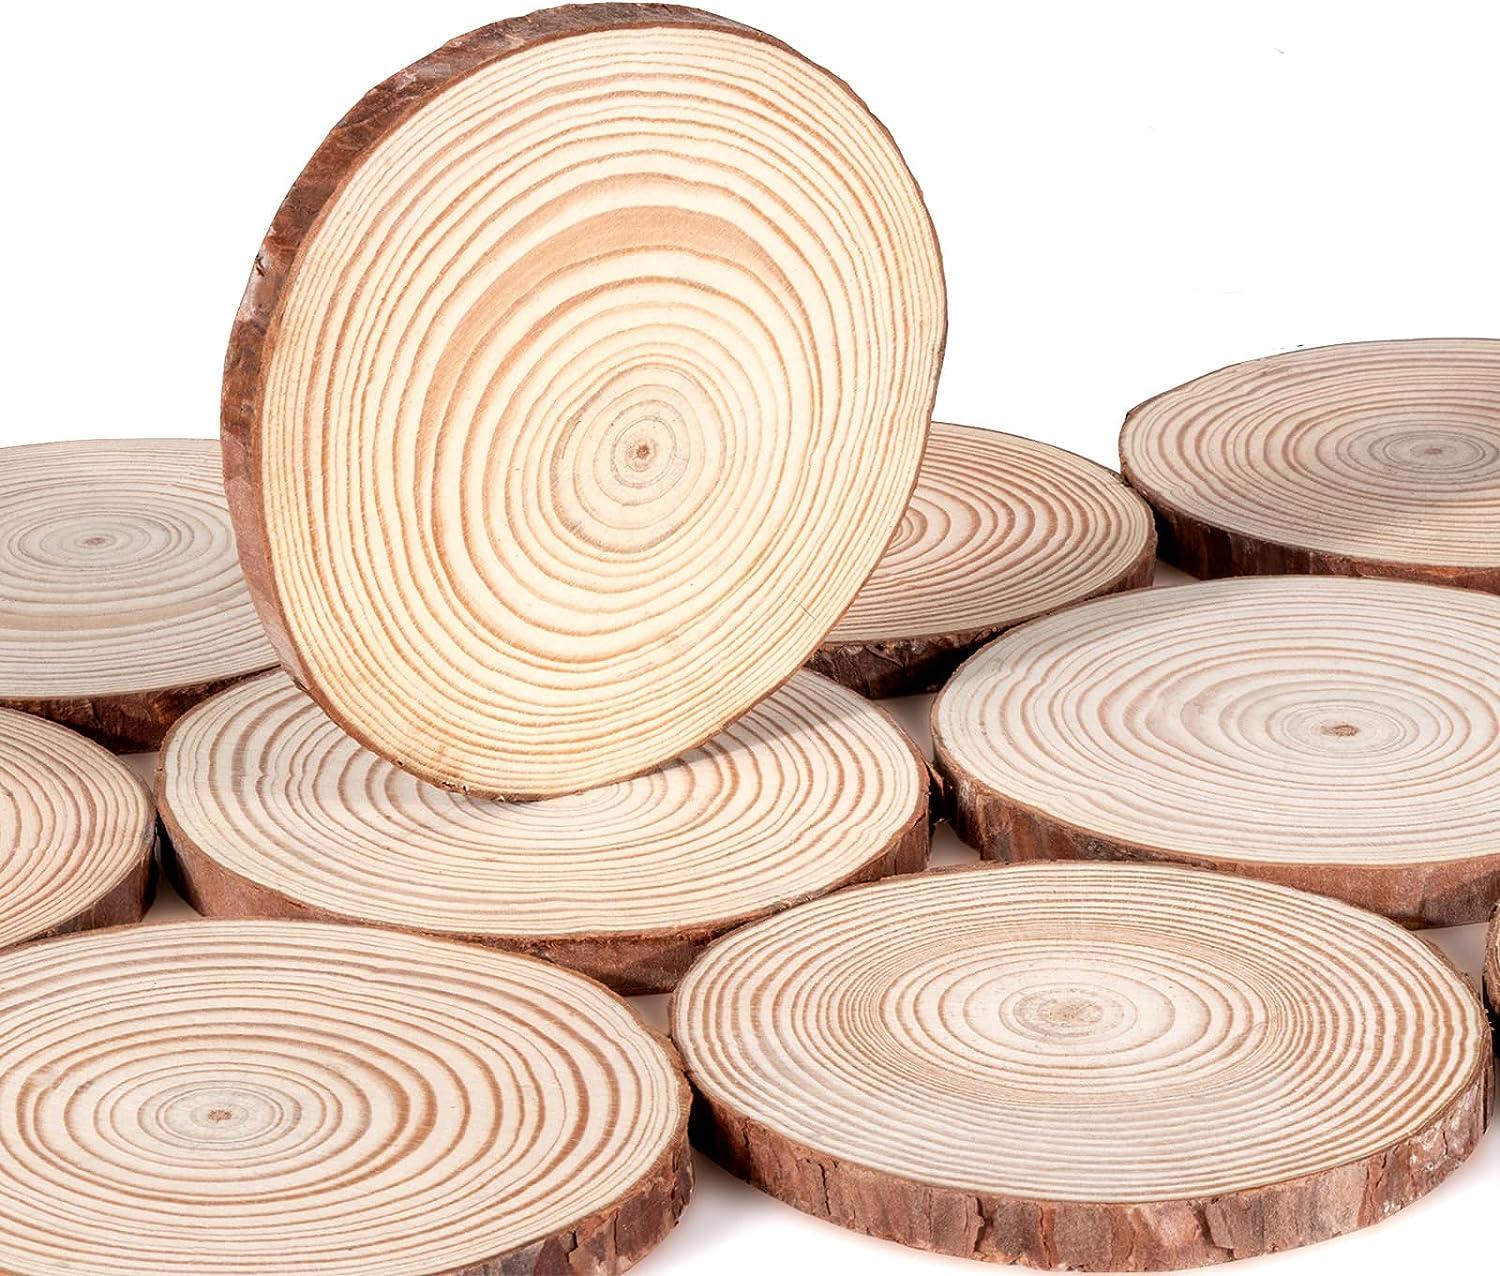 Lemonfilter Natural Wood Slices 16 Pcs 4.3-4.7 Inches Craft Wood